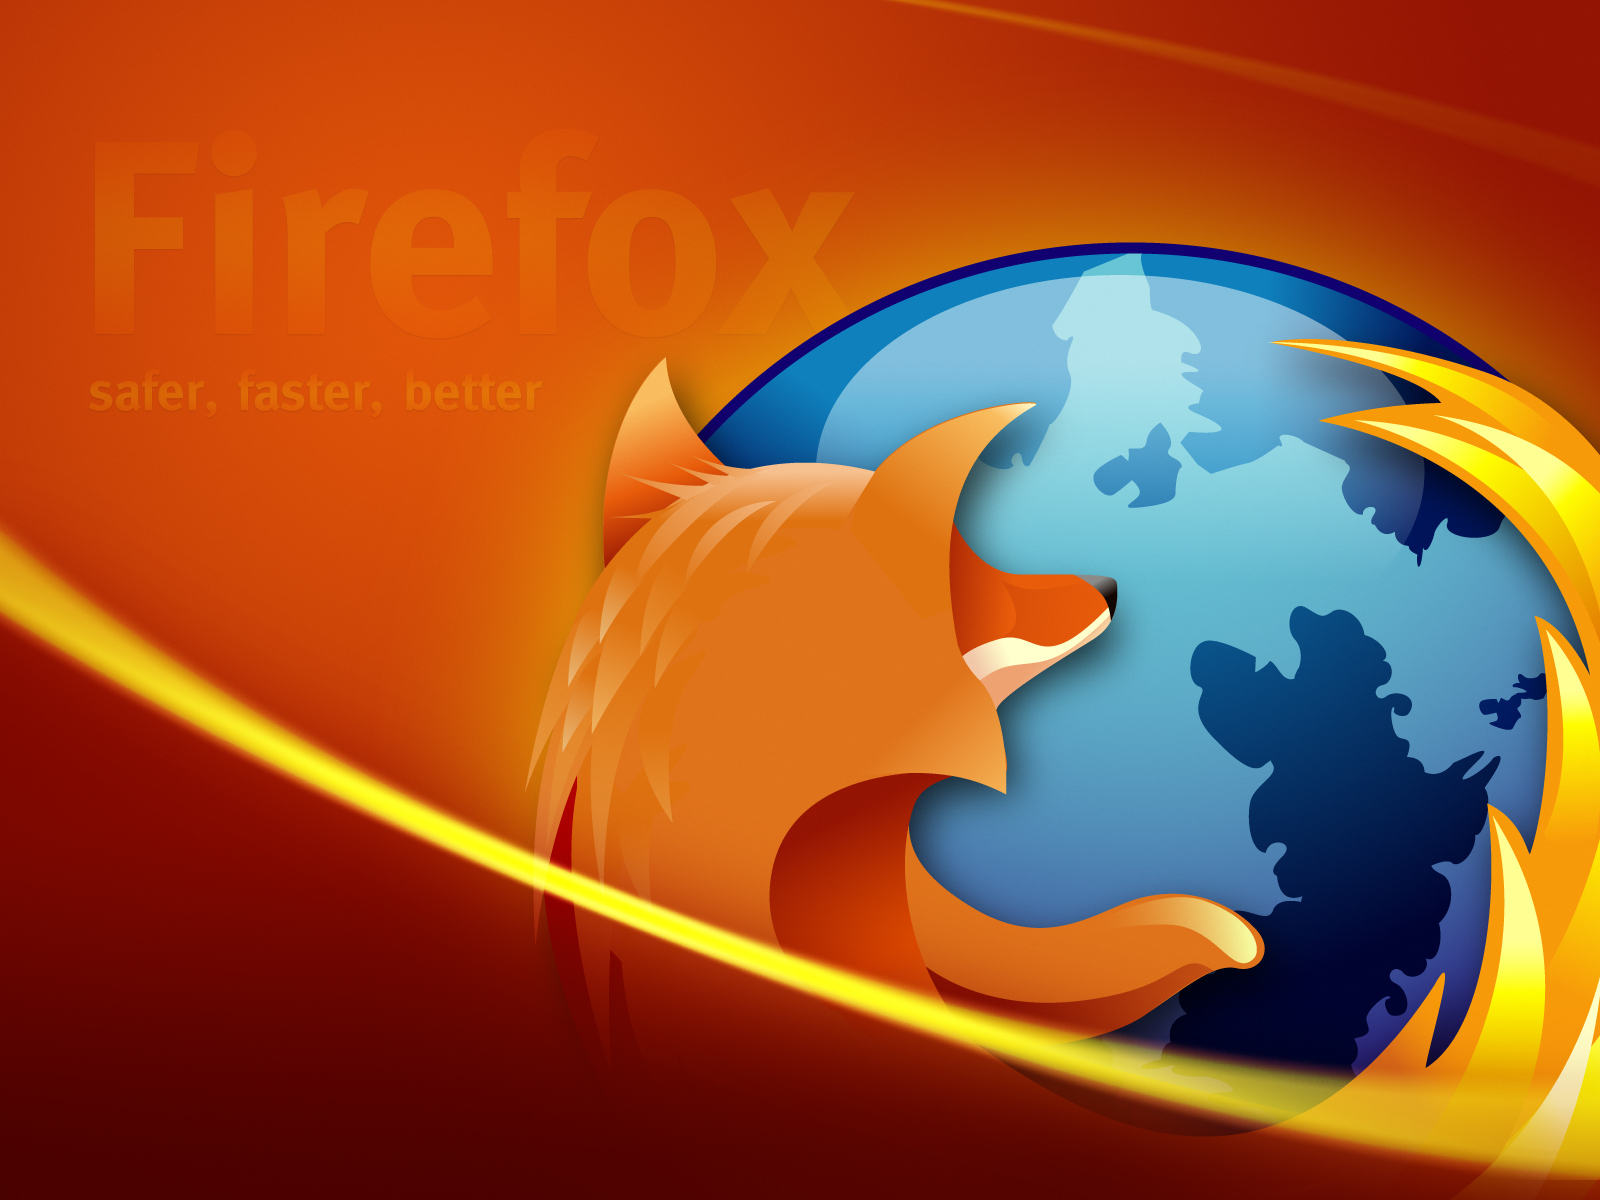 3d обои Firefox  safe, faster, better  бренд # 21123